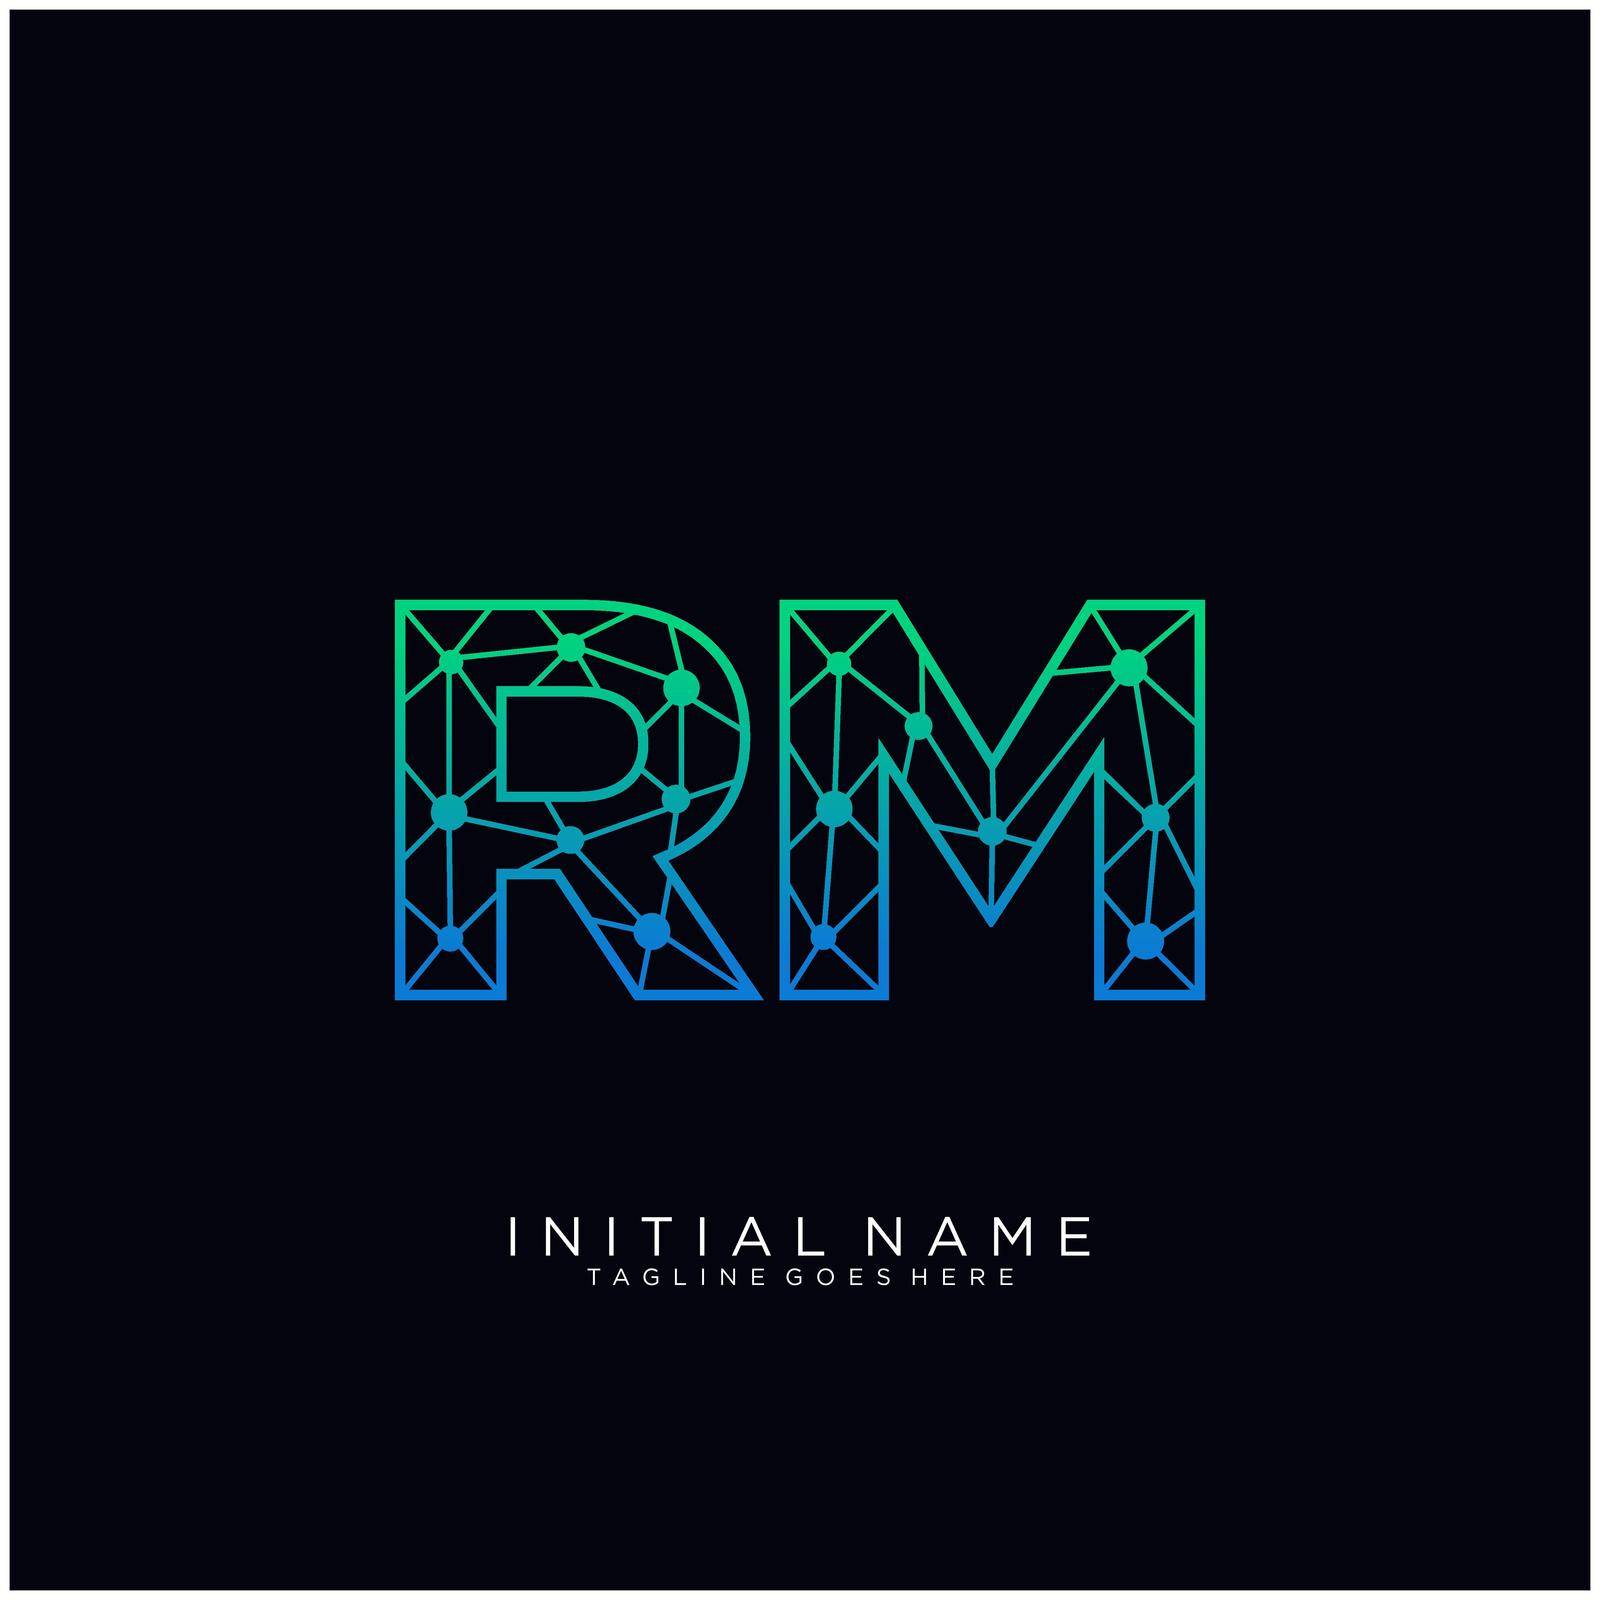 RM Letter logo icon design template elements by liaanniesatul